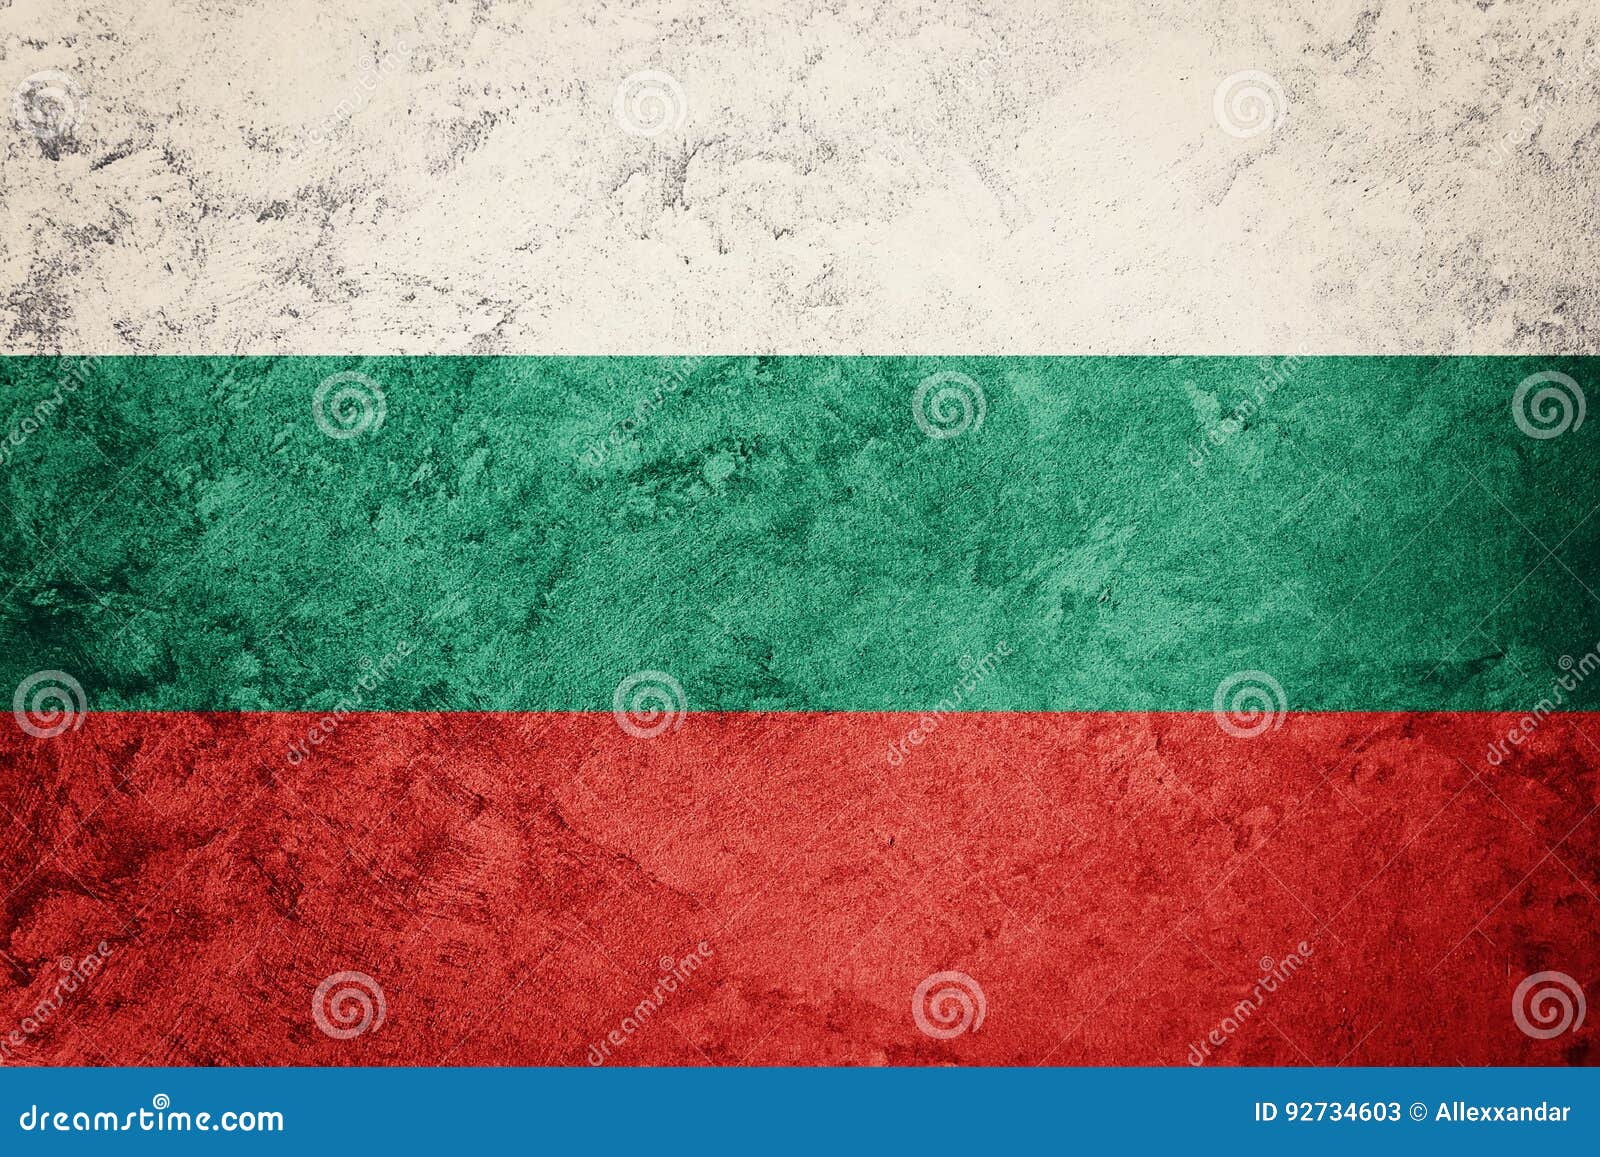 grunge bulgaria flag. bulgarian flag with grunge texture.